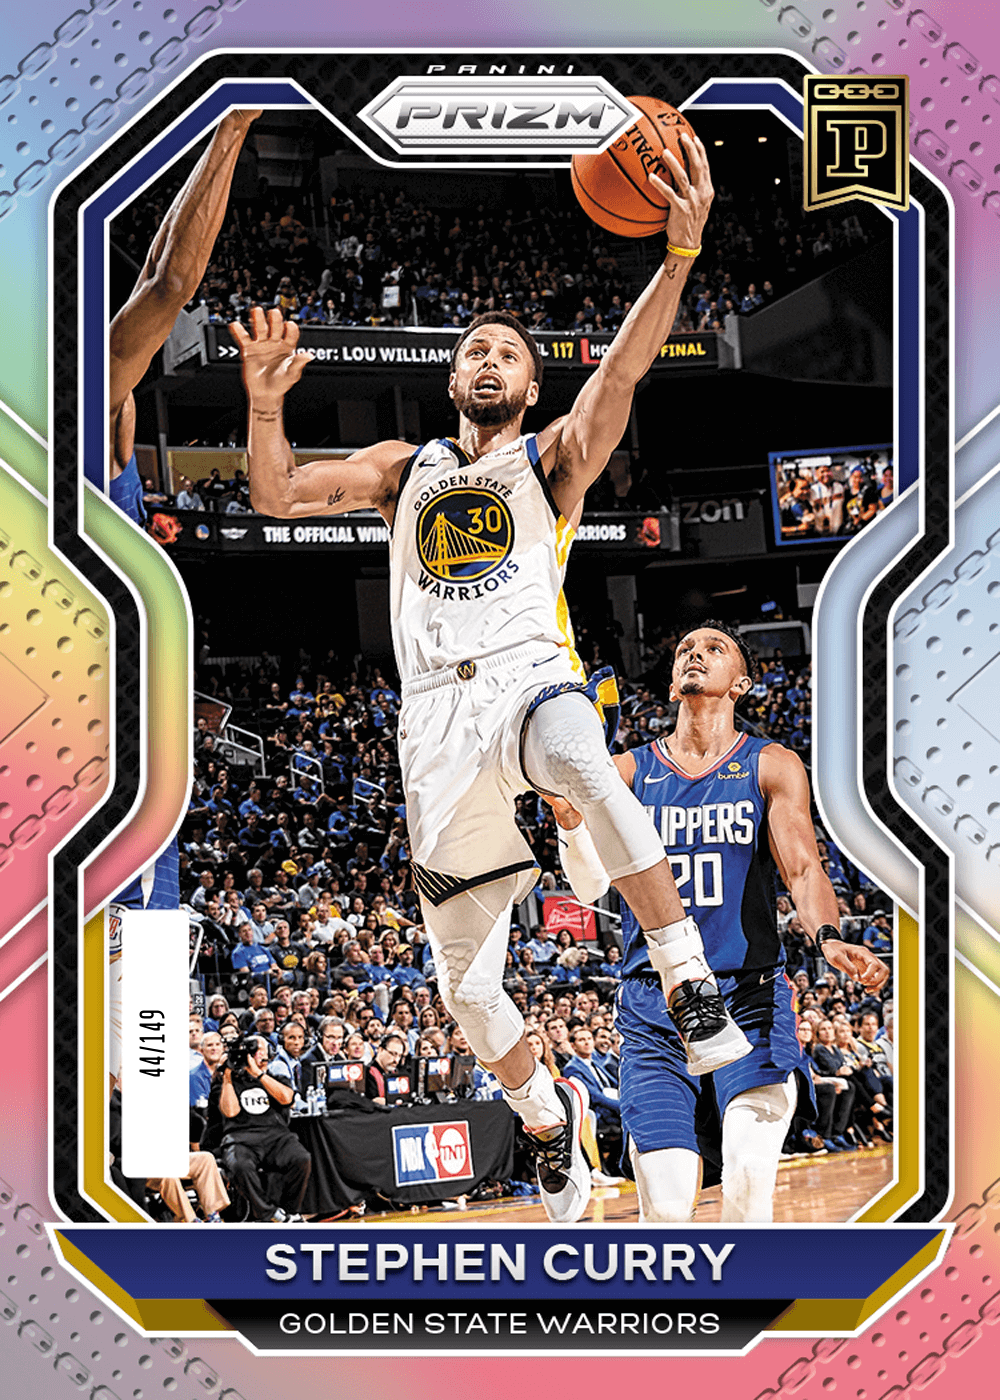 20-21 Stephen Curry Prizm Silver Base NBA NFT Basketball Trading Card |  Panini America